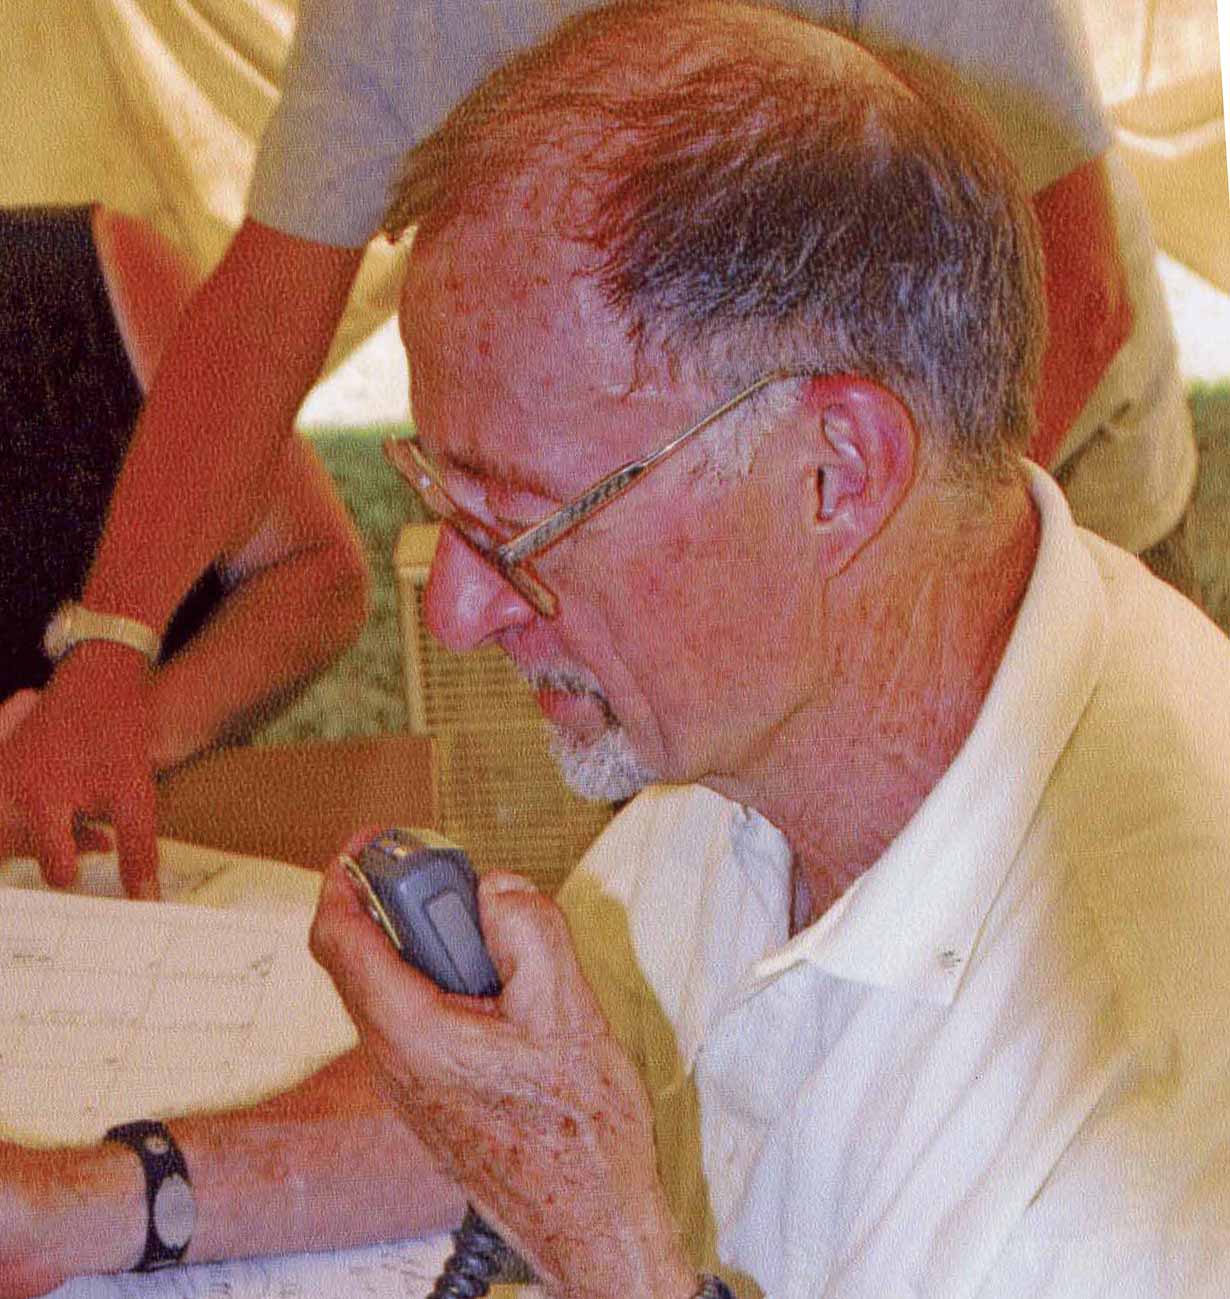 Portrait of a man speaking into a hand held radio speaker.